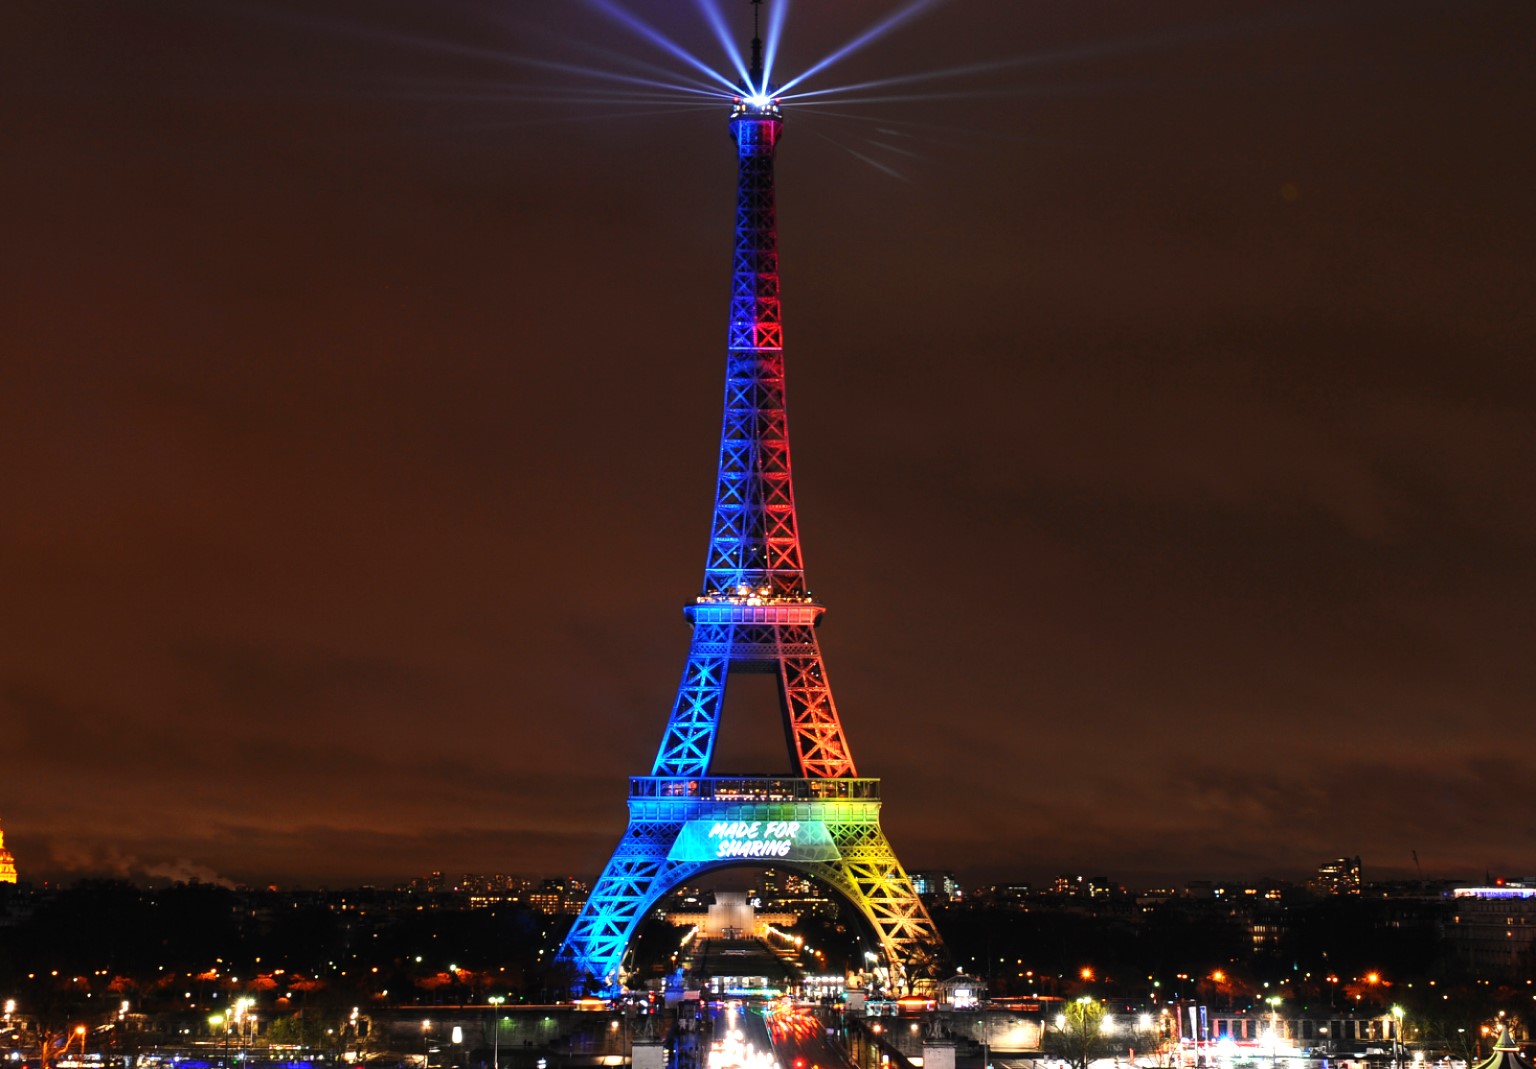 Paris will host the 2024 Olympics